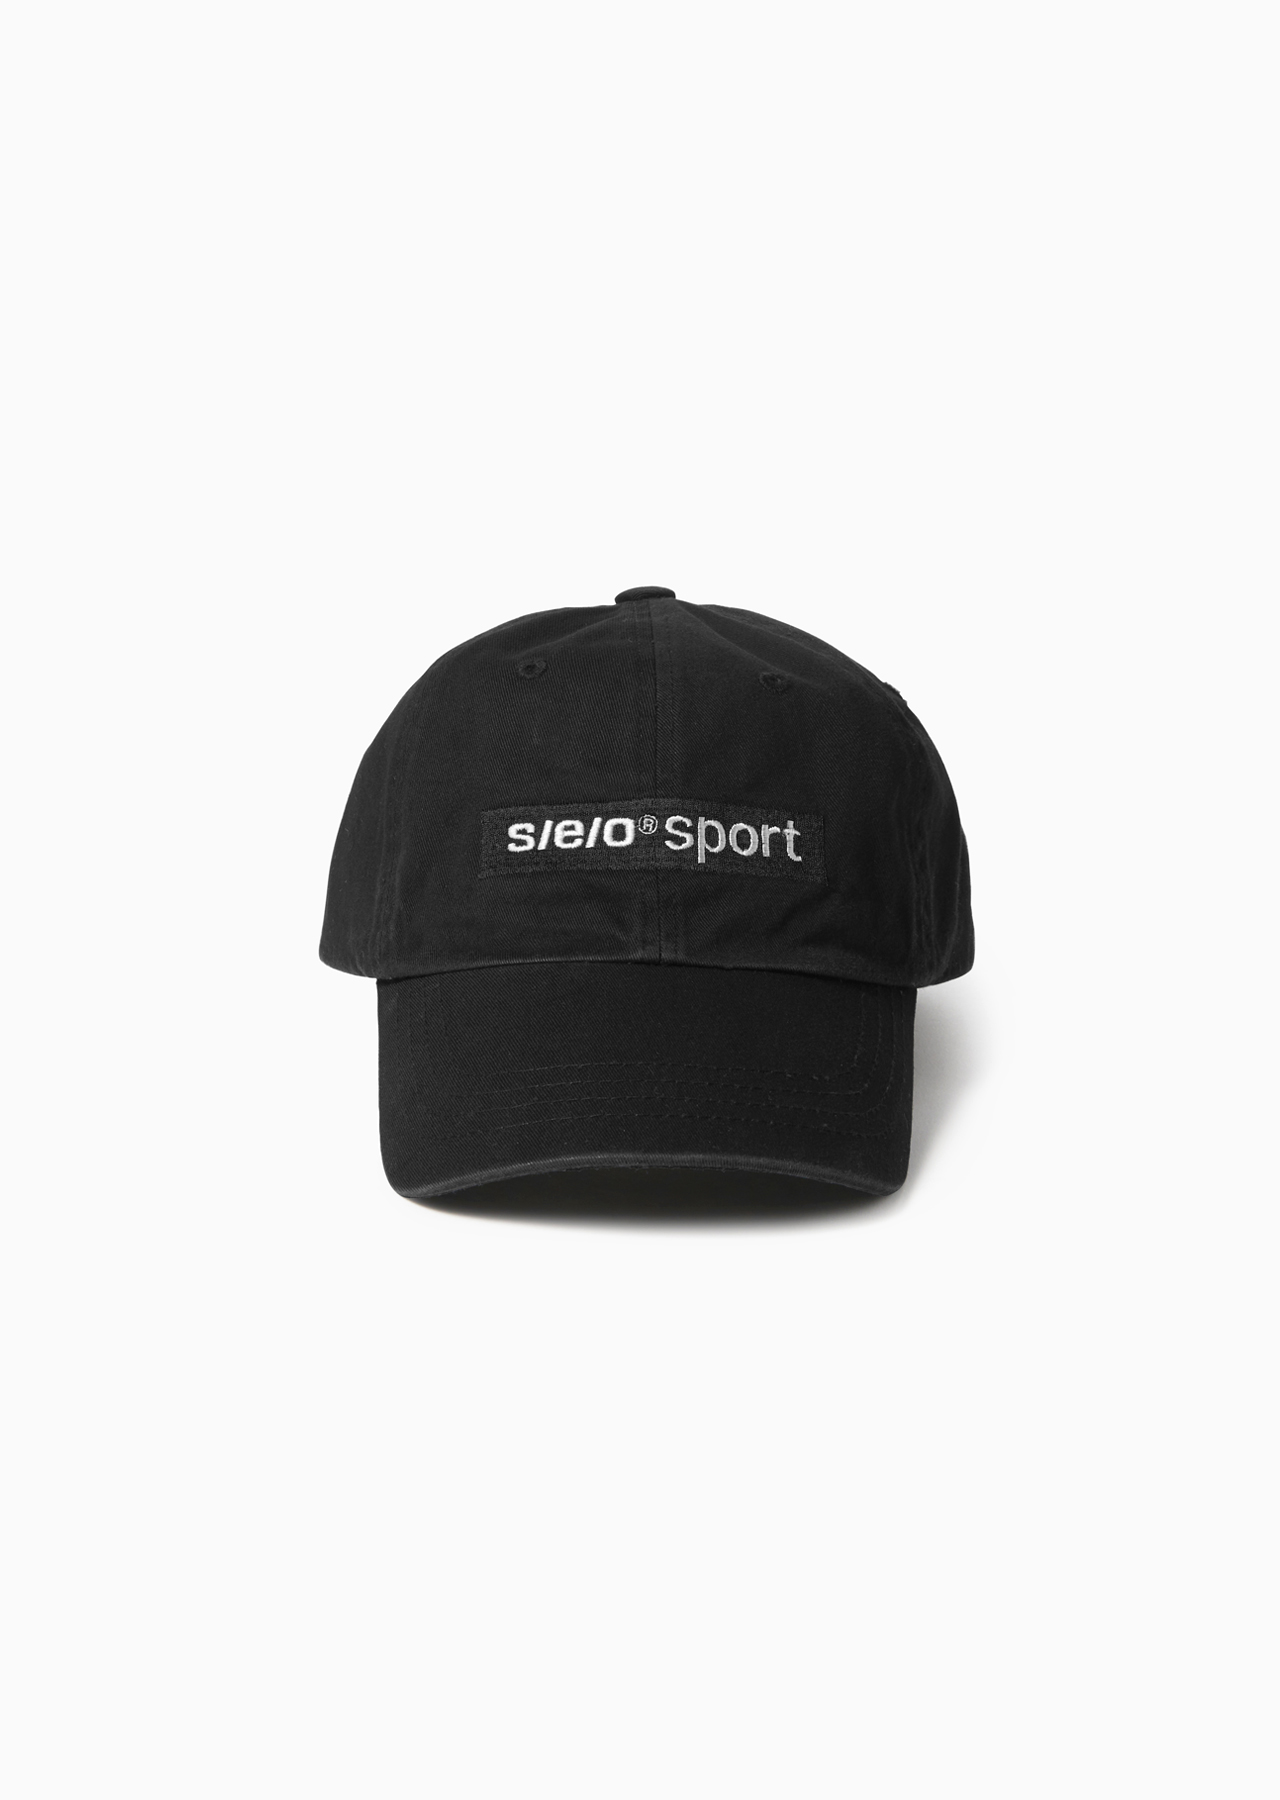 s/e/o SPORT CAP BLACK